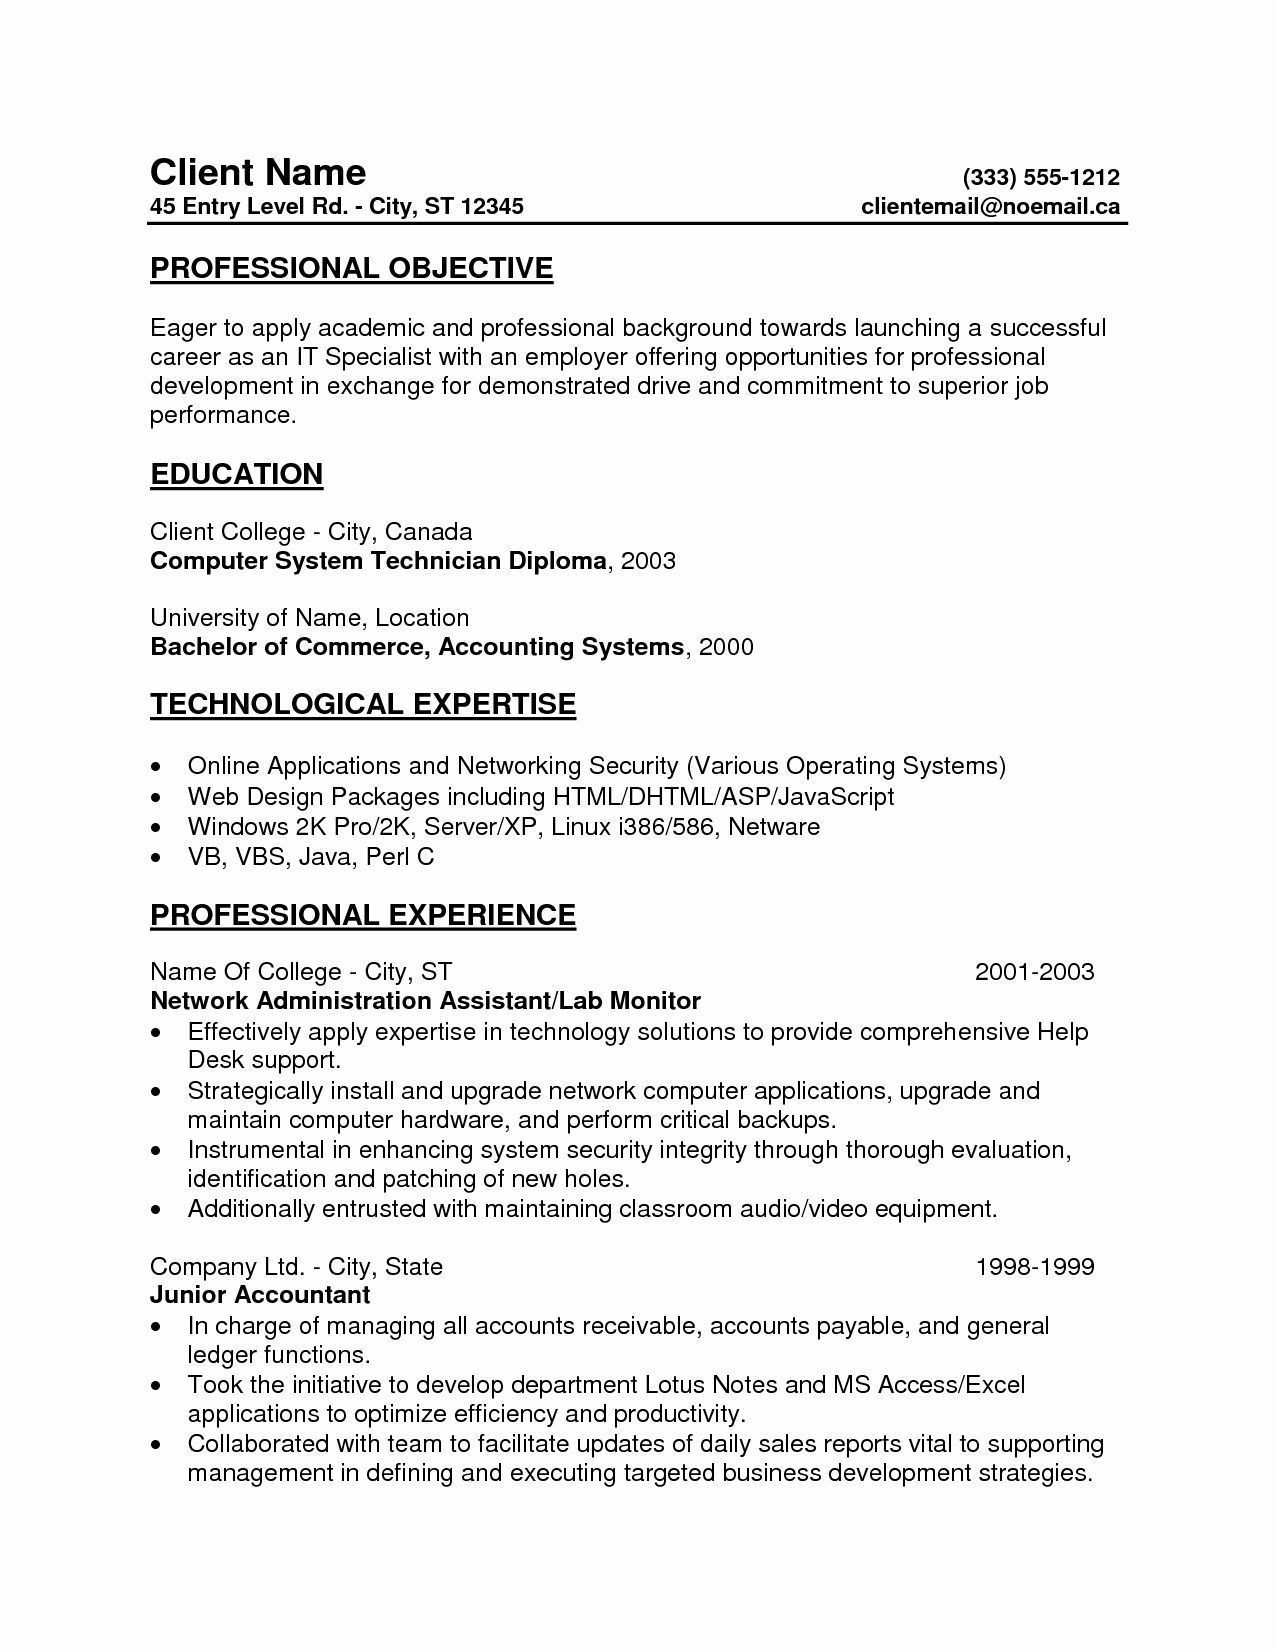 Sample Resume Objectives for Entry Level Jobs Resume Objective Examples Entry Level